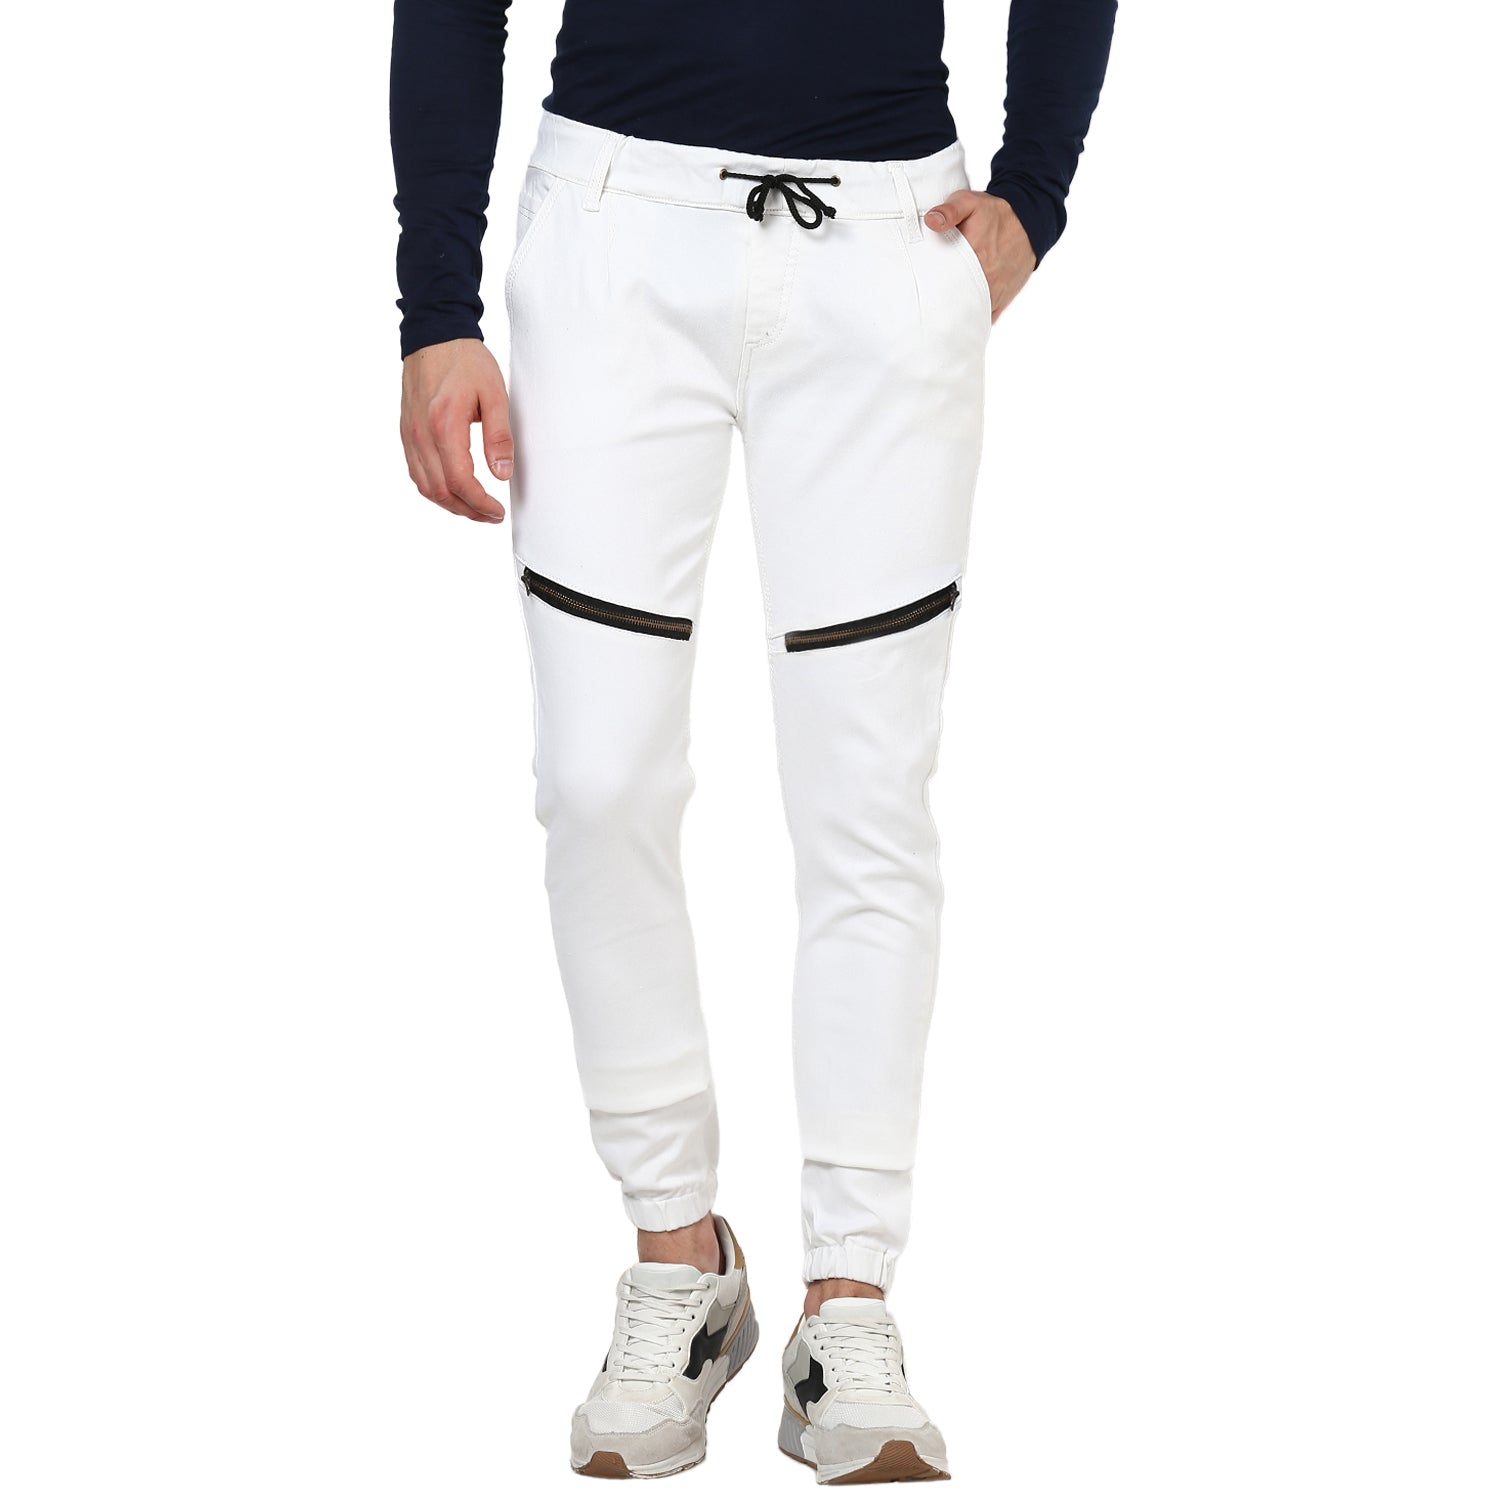 Urbano Fashion Men's White Slim Fit Zippered Jogger Jeans Stretch